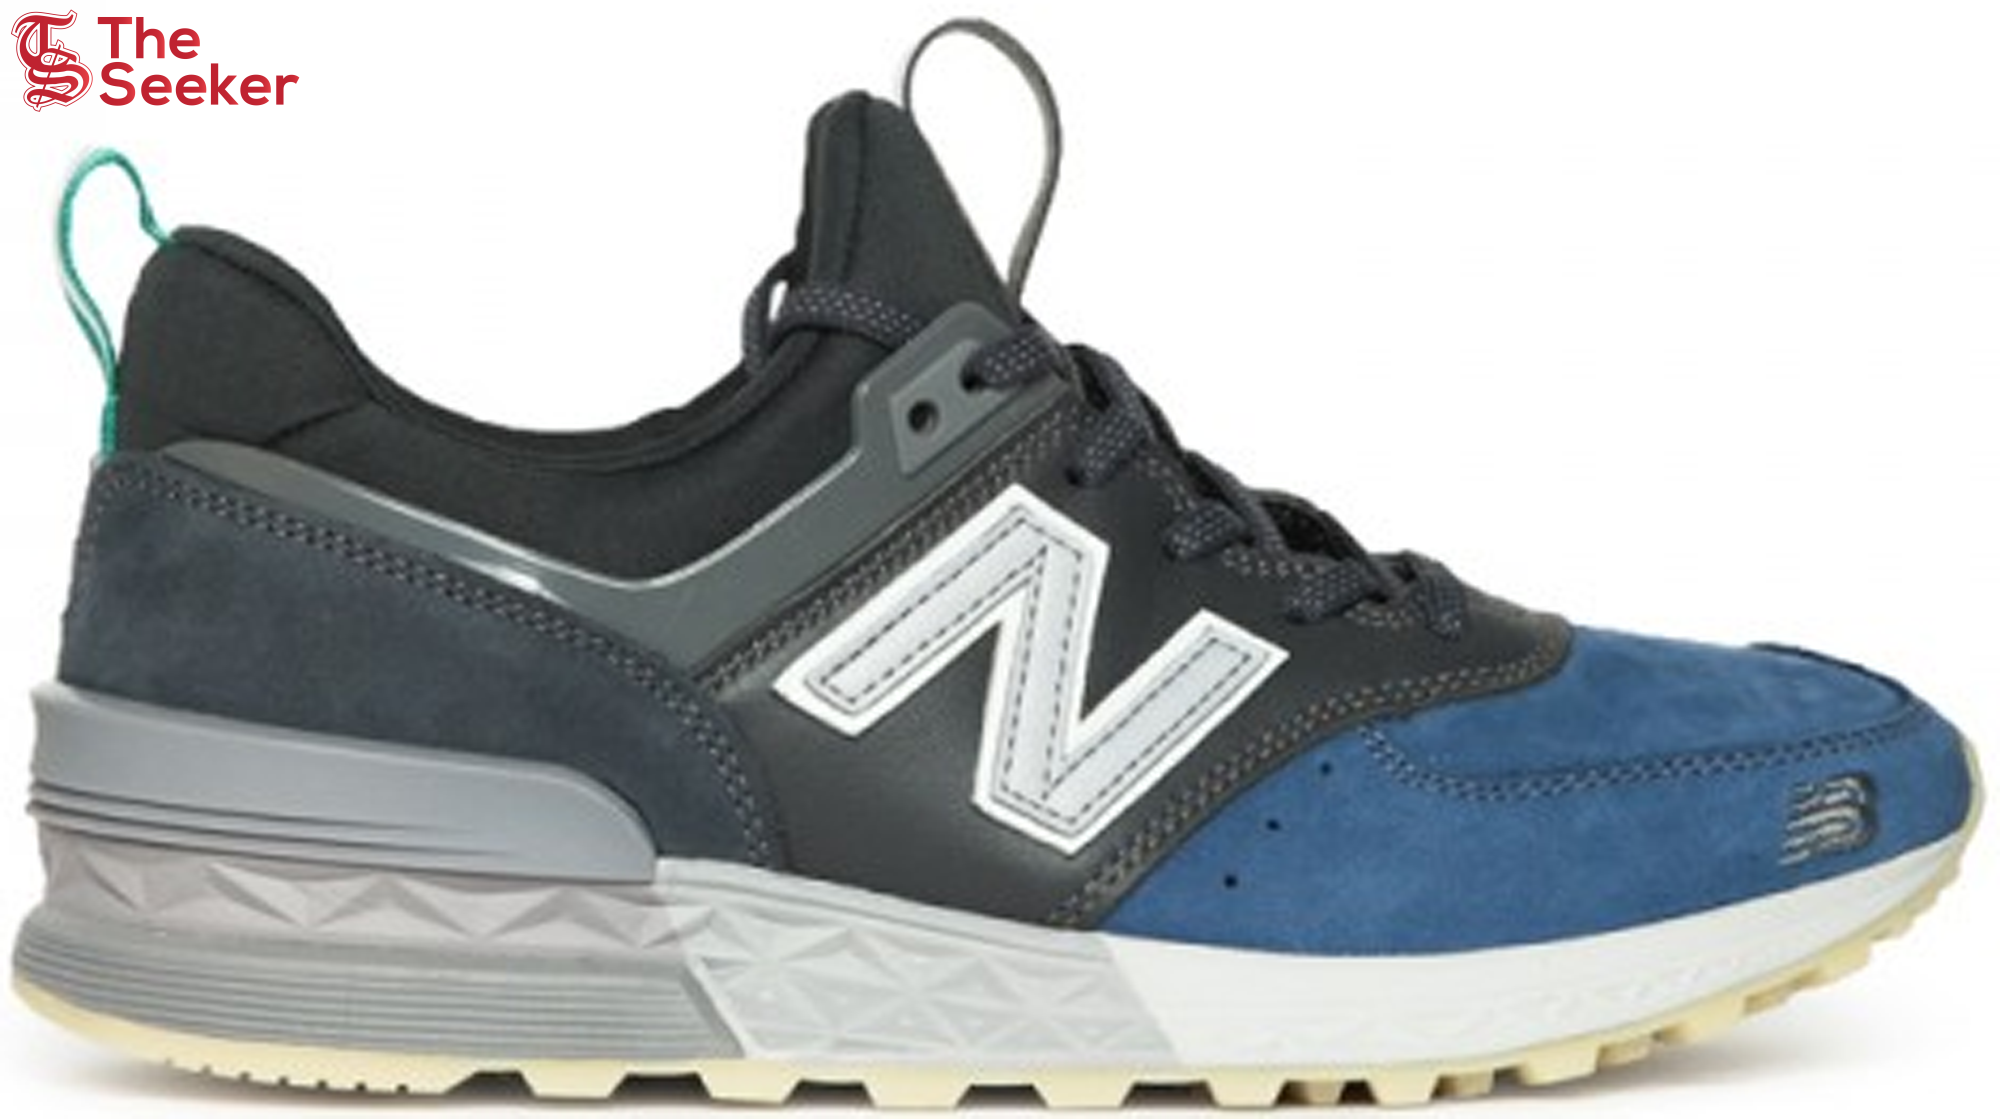 New Balance 574 Sport mita sneakers Black Blue Grey